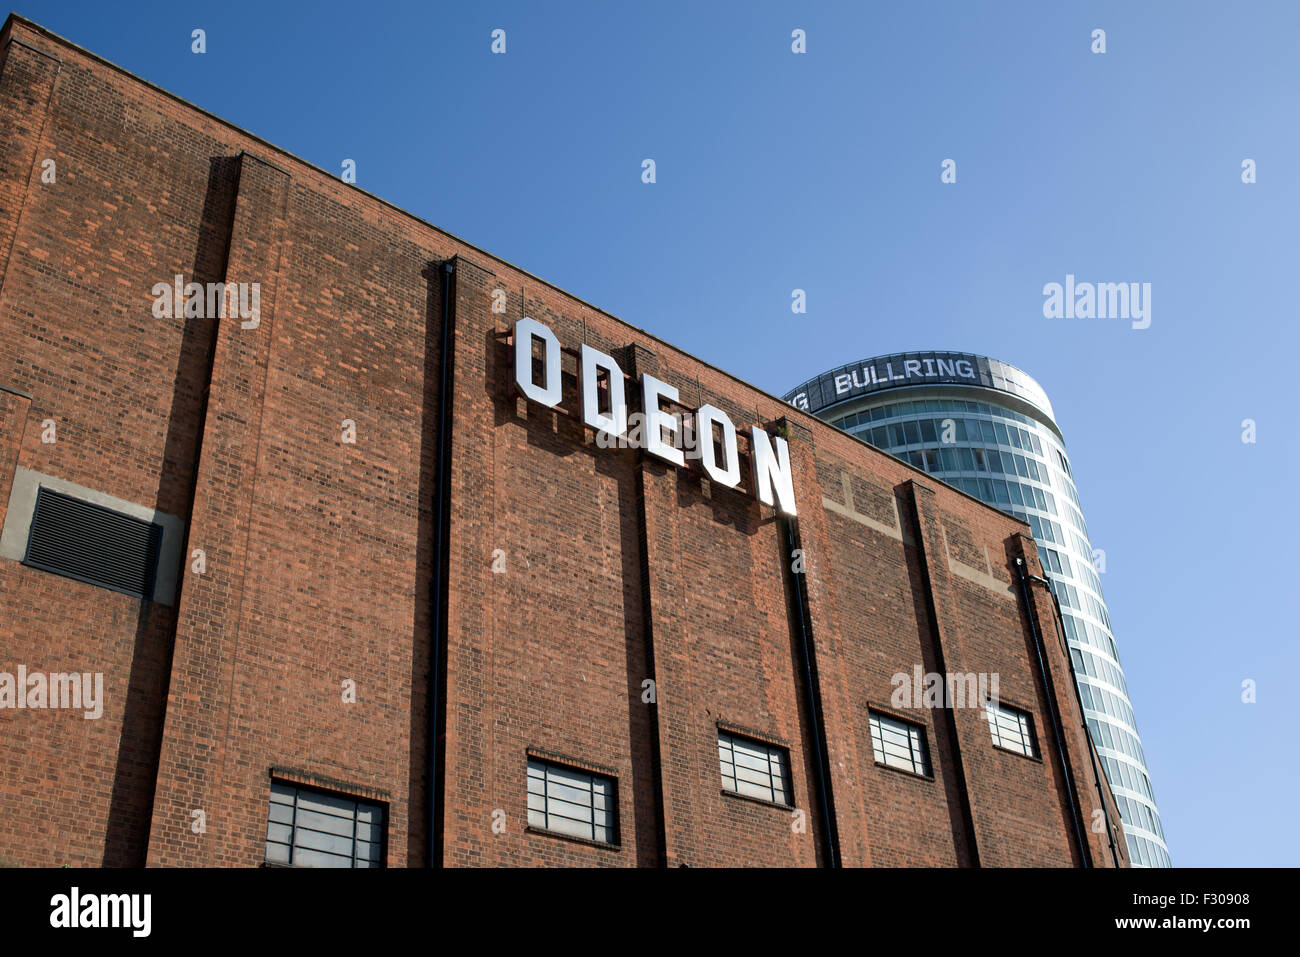 Odeon Cinema And Bullring Tower Birmingham ,UK. Stock Photo